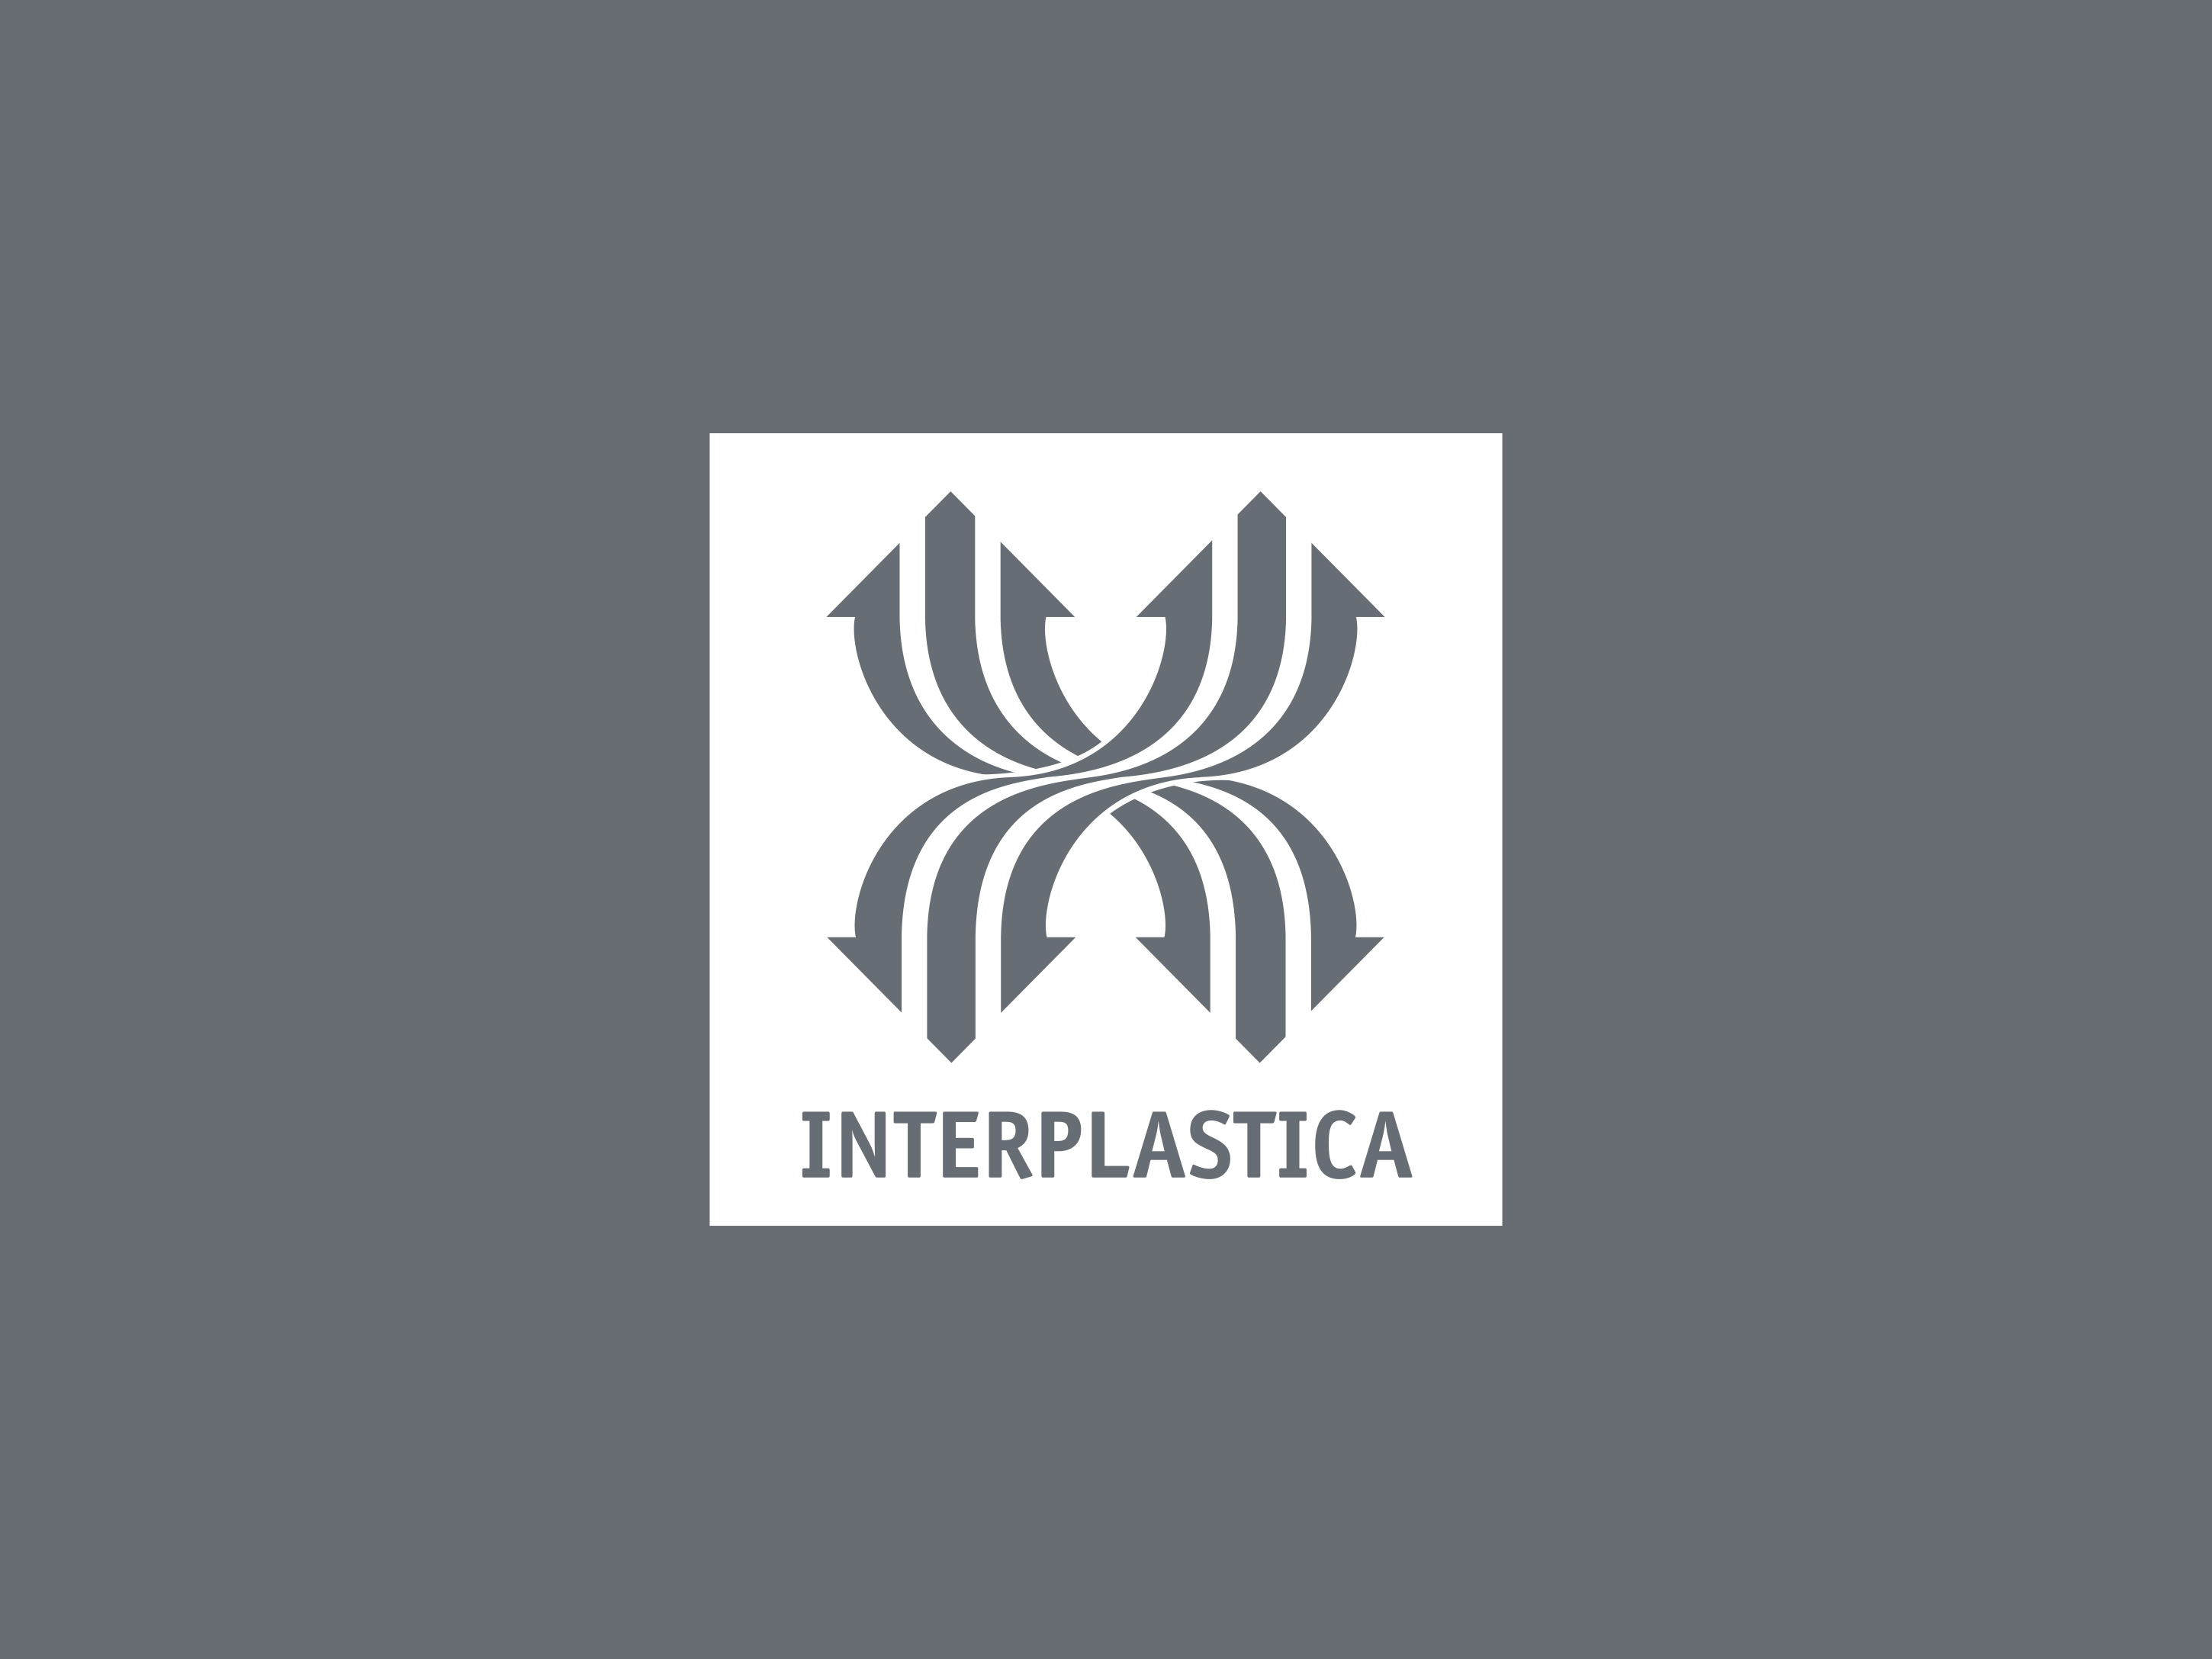 Logo of the trade fair for plastics and rubber processing Interplastica